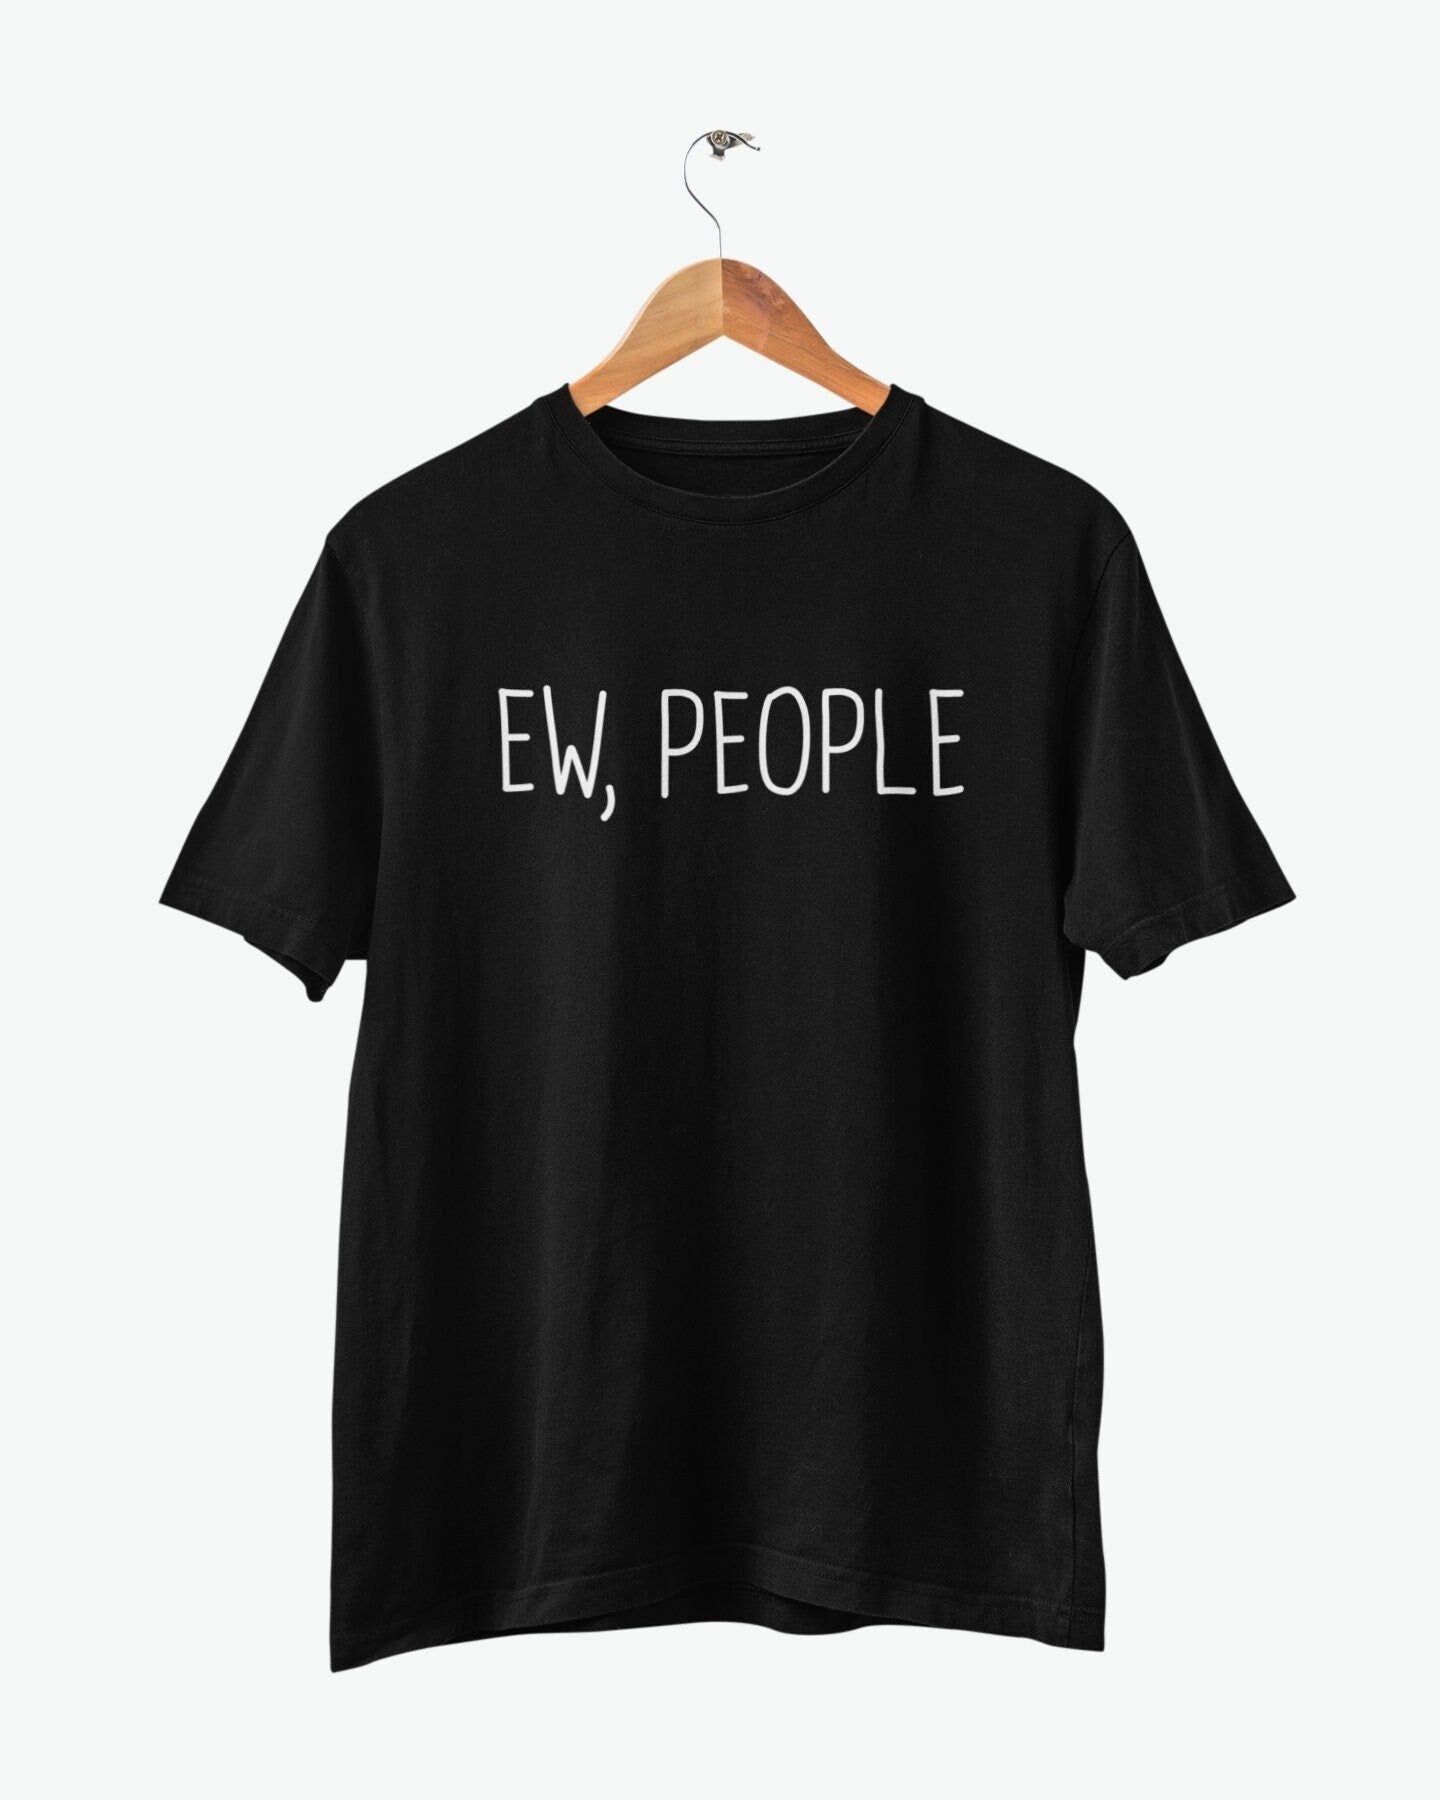 Unisex Ew People T-Shirt, Funny T-Shirt, Slogan Shirt, Aesthetic T-Shirt, Novelty t-shirt, introvert t-shirt, sarcasm tshirt, Adult